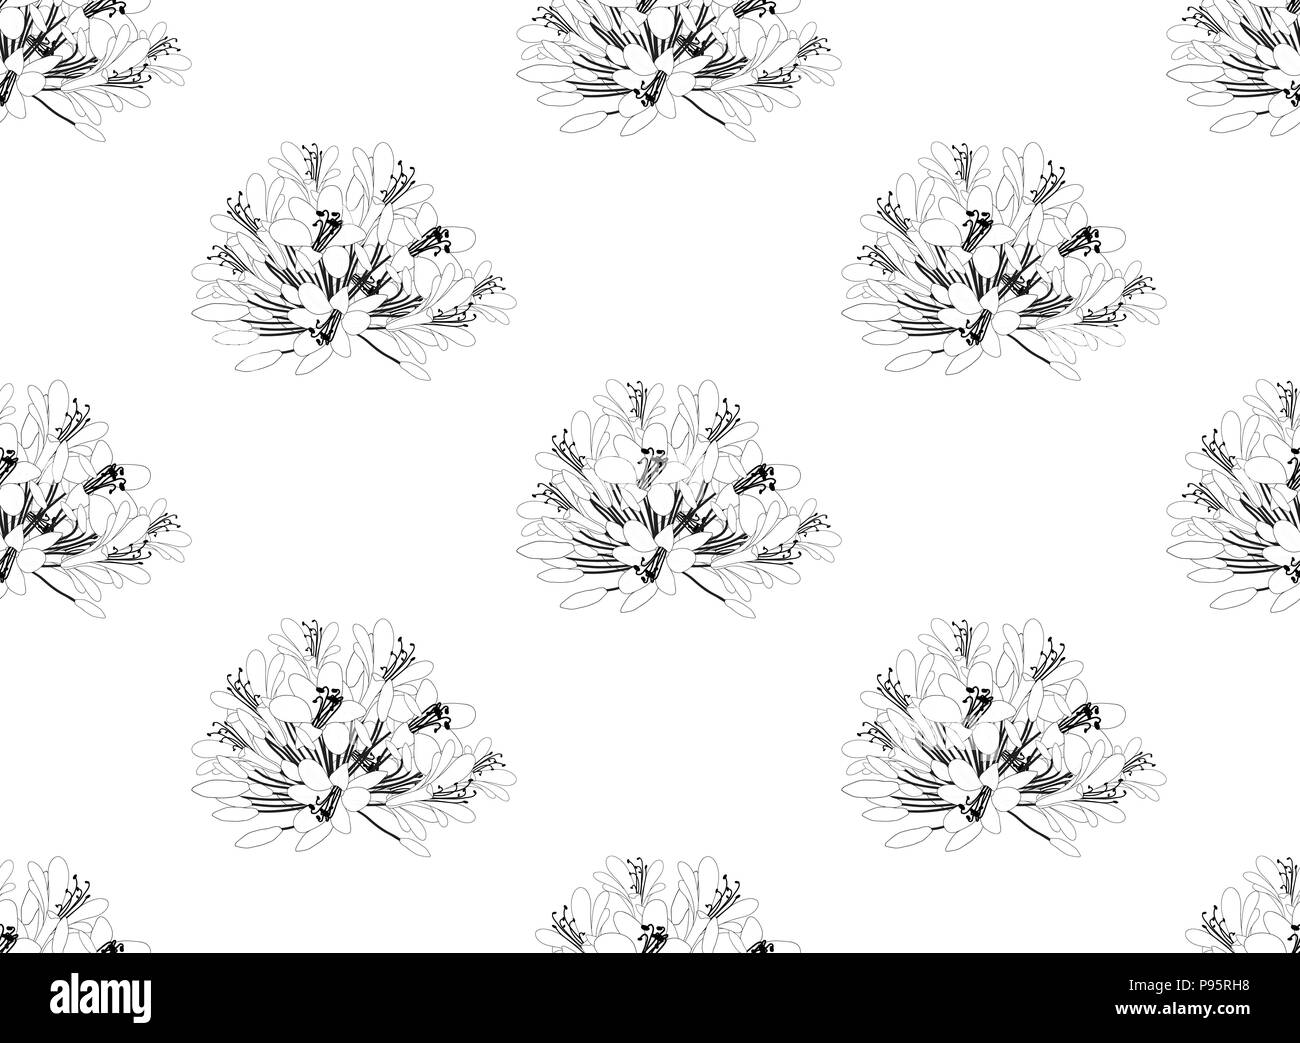 Agapanthus Seamless su sfondo bianco. Illustrazione Vettoriale. Illustrazione Vettoriale